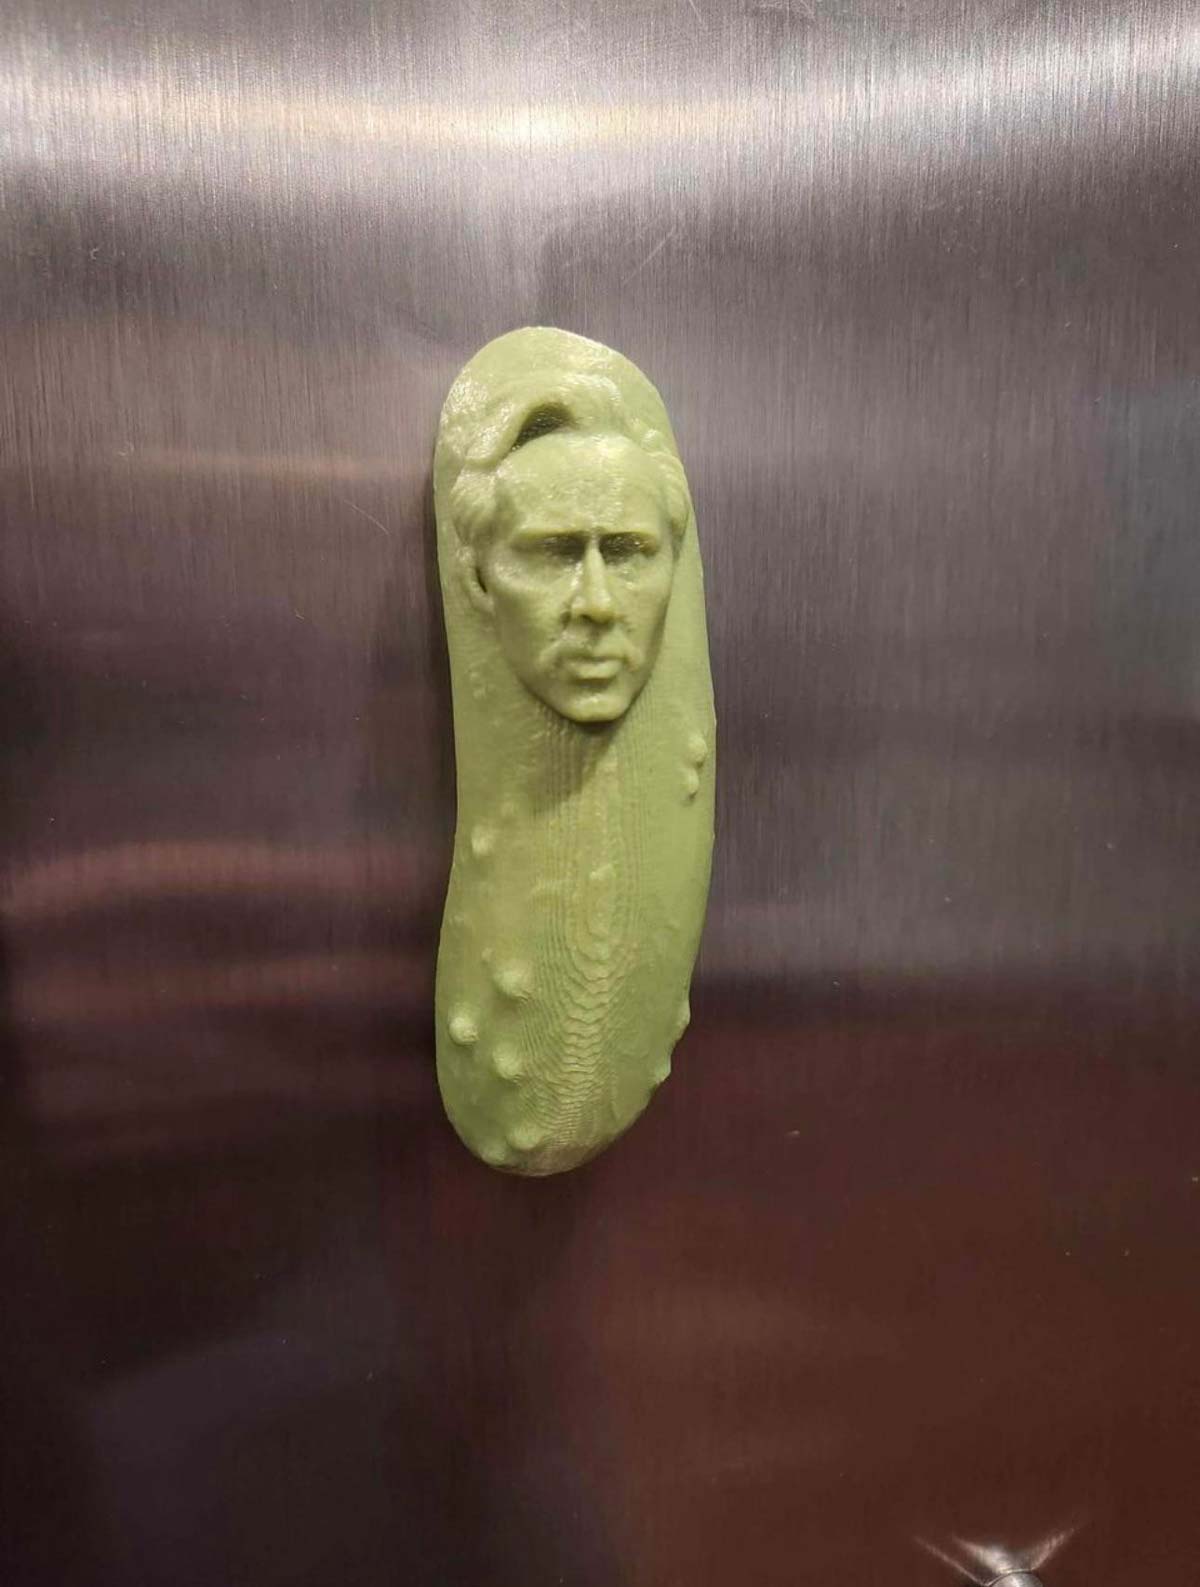 My friend 3D printed Nicolas Cage pickle fridge magnet